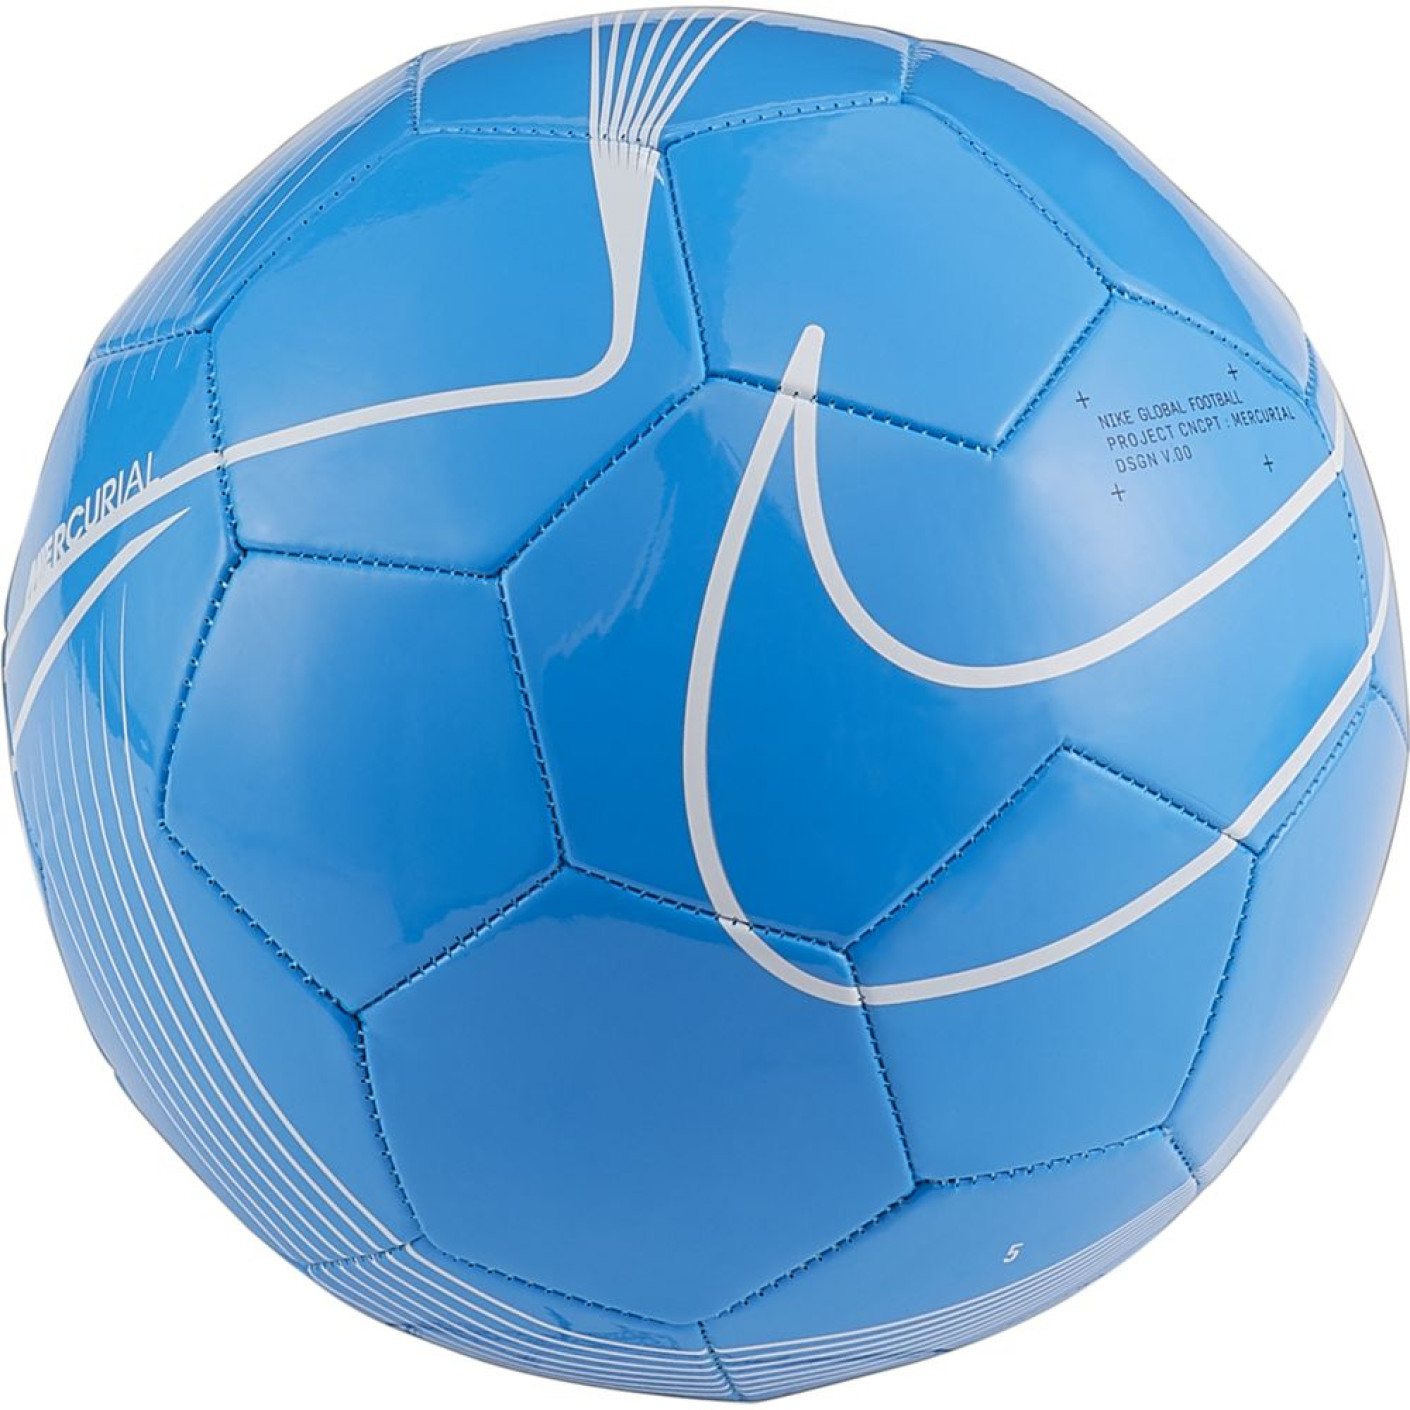 Nike Mercurial Fade Voetbal Blauw Wit Blauw